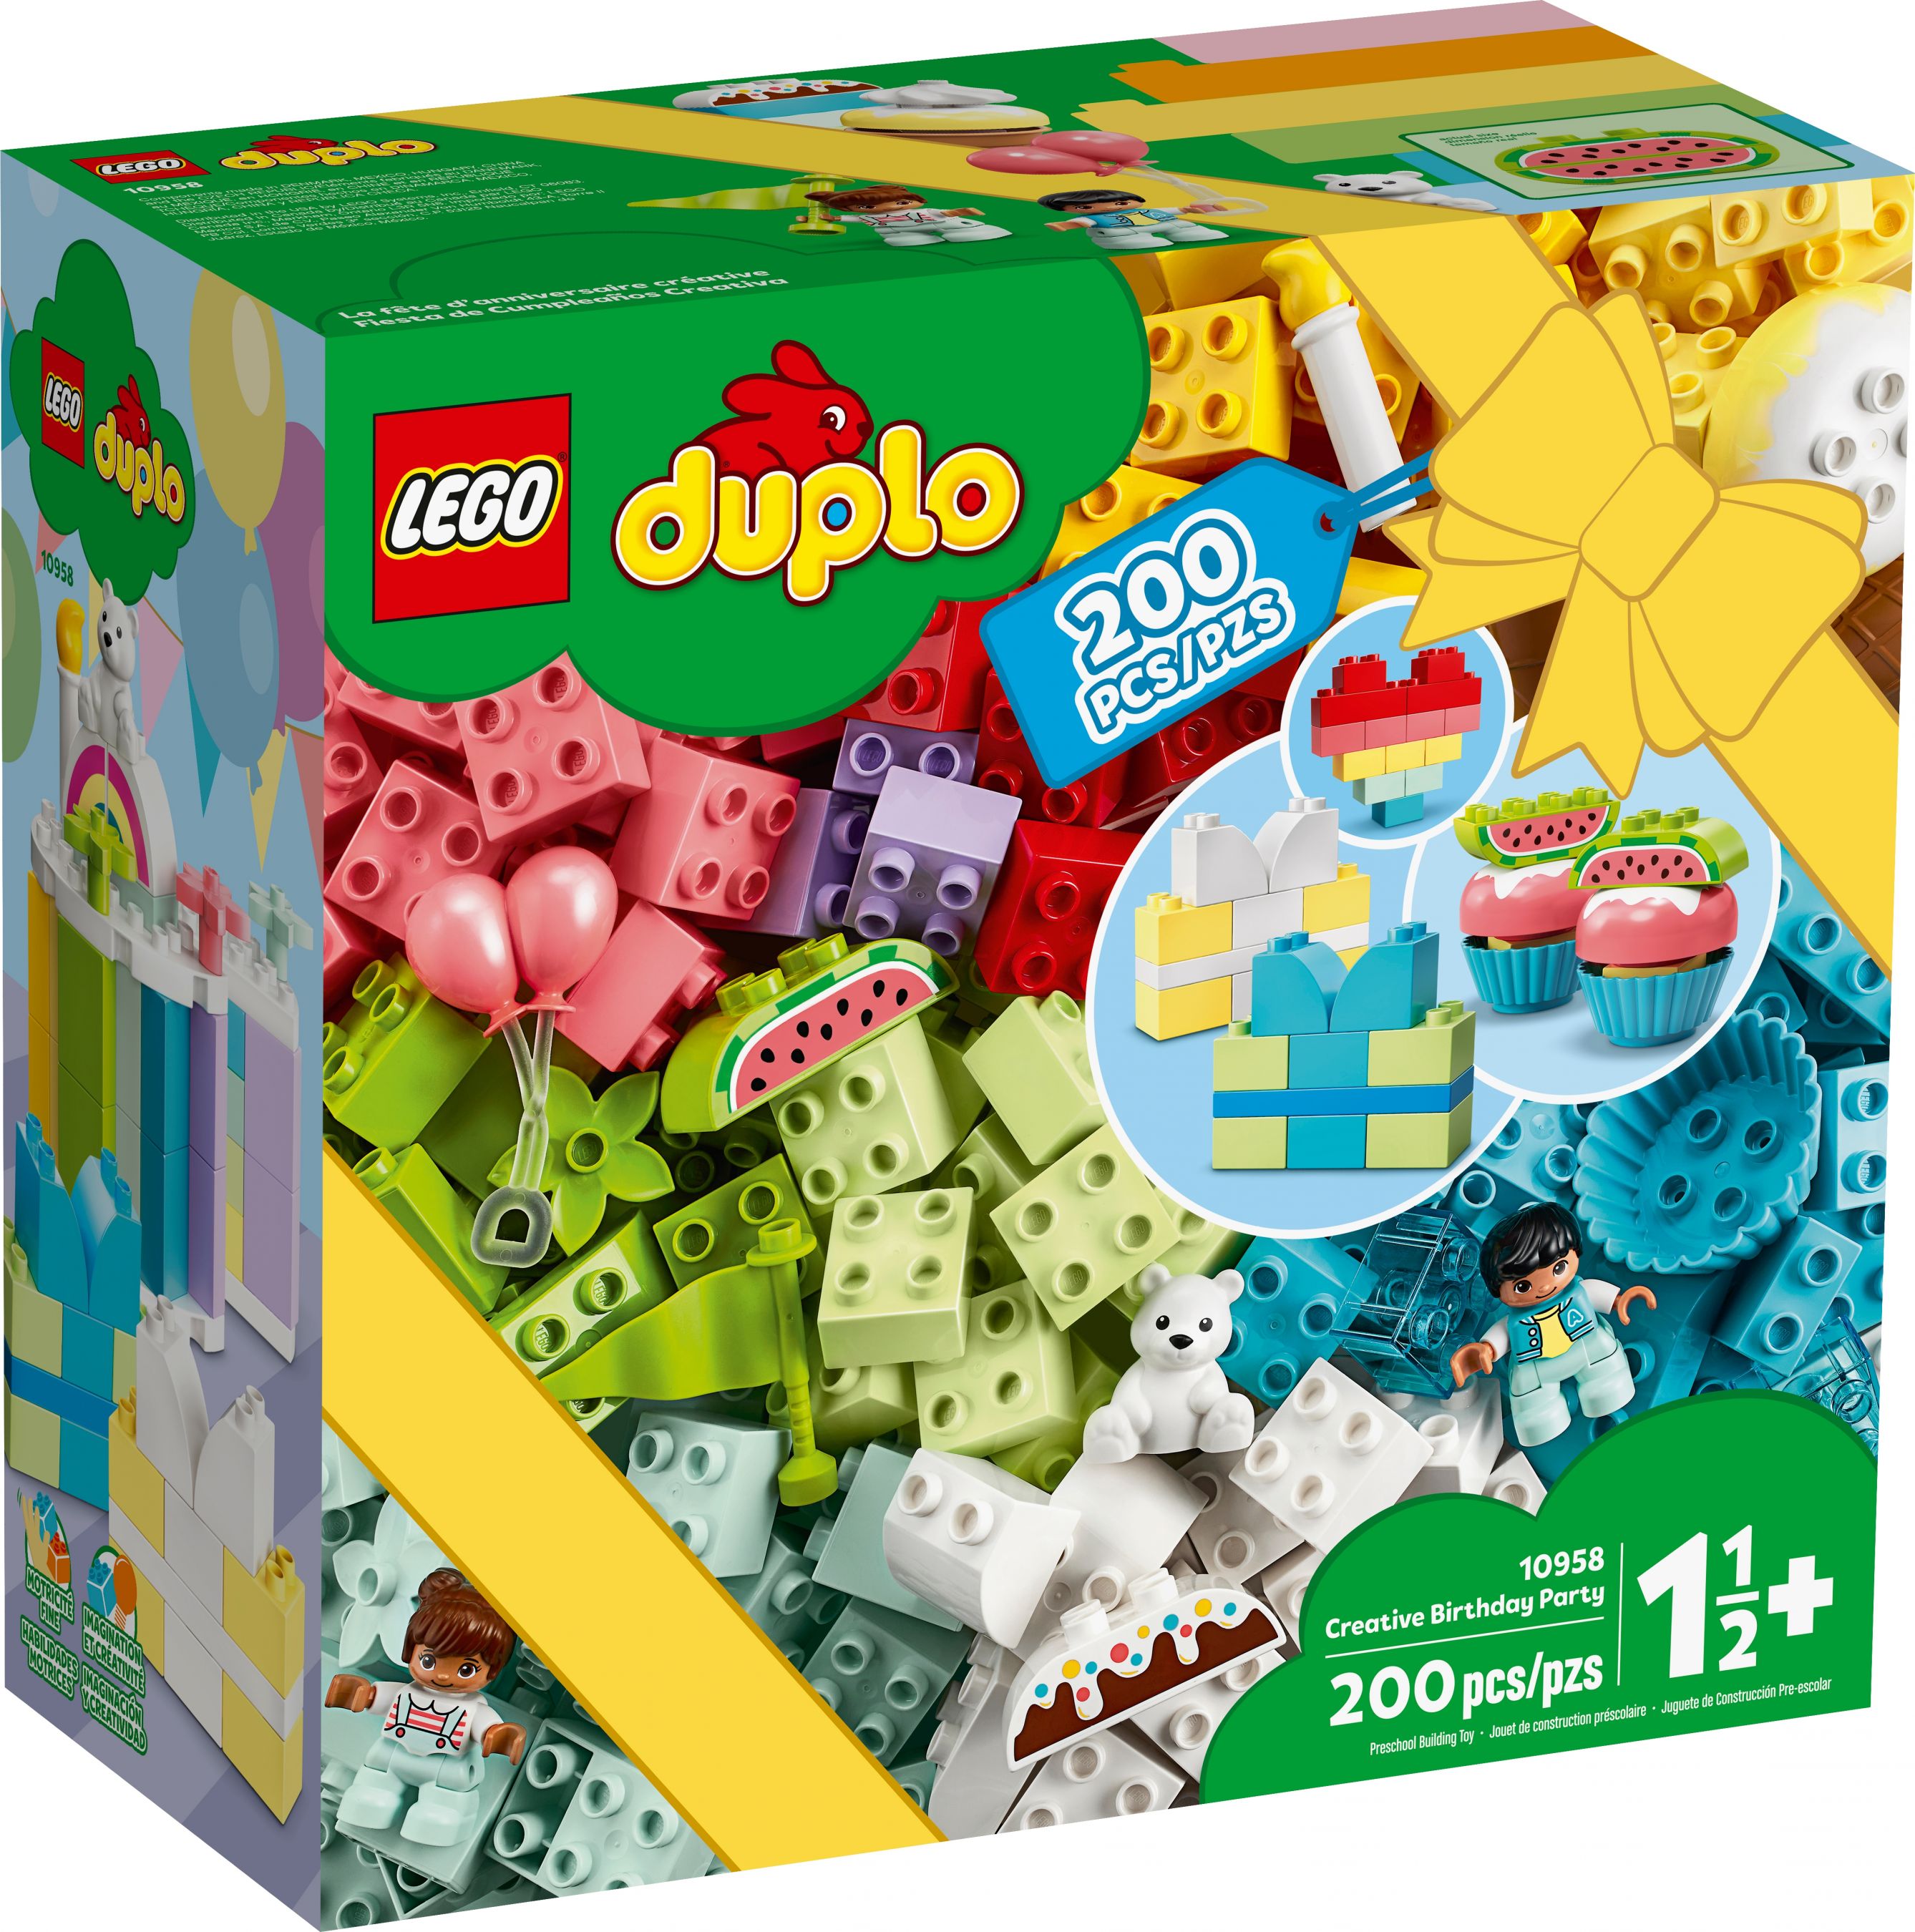 LEGO Duplo 10958 Kreative Geburtstagsparty LEGO_10958_box1_v39.jpg